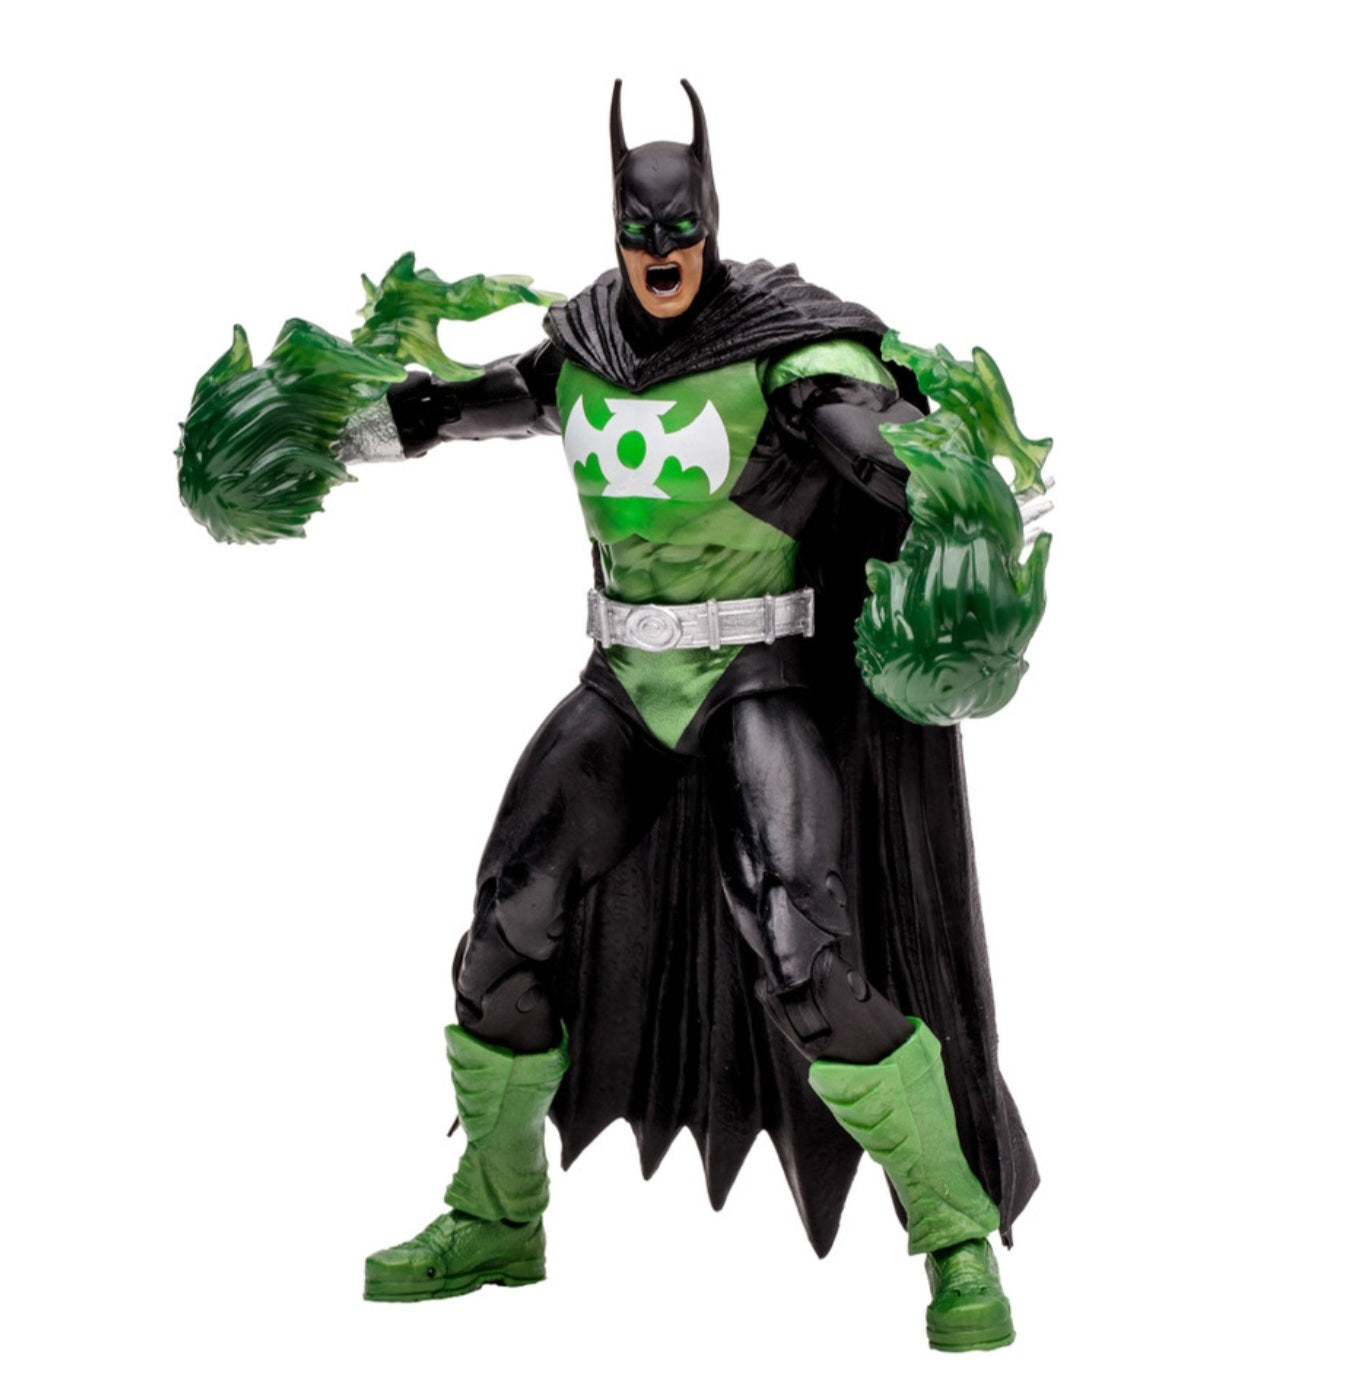 Batman Green Lantern DC Multiverse 7" Action Figure McFarlane Collector Edition